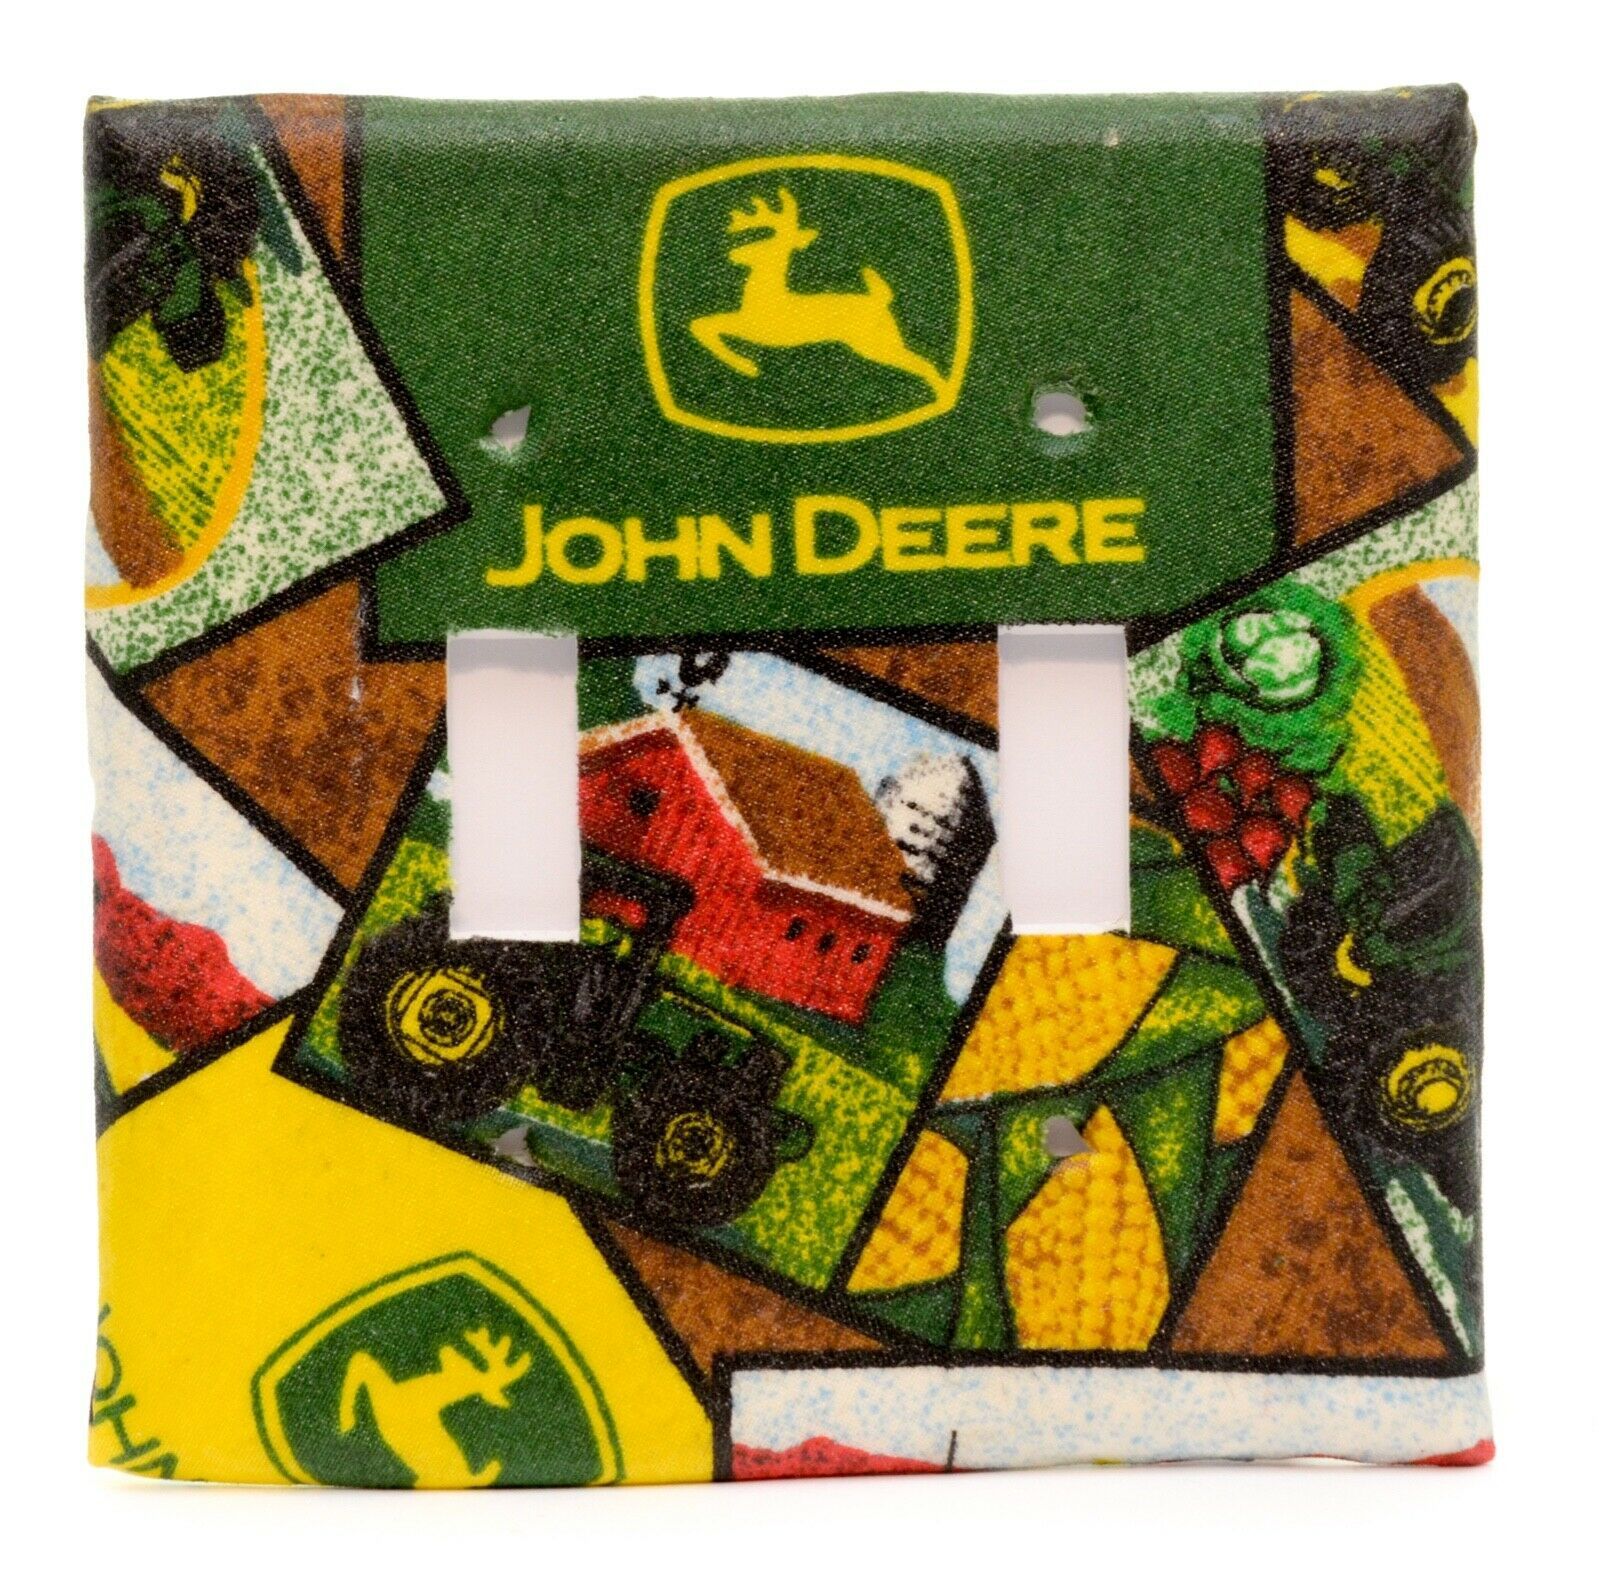 John Deere Double Switch Plate Cover Plastic Handmade Vintage - $11.85